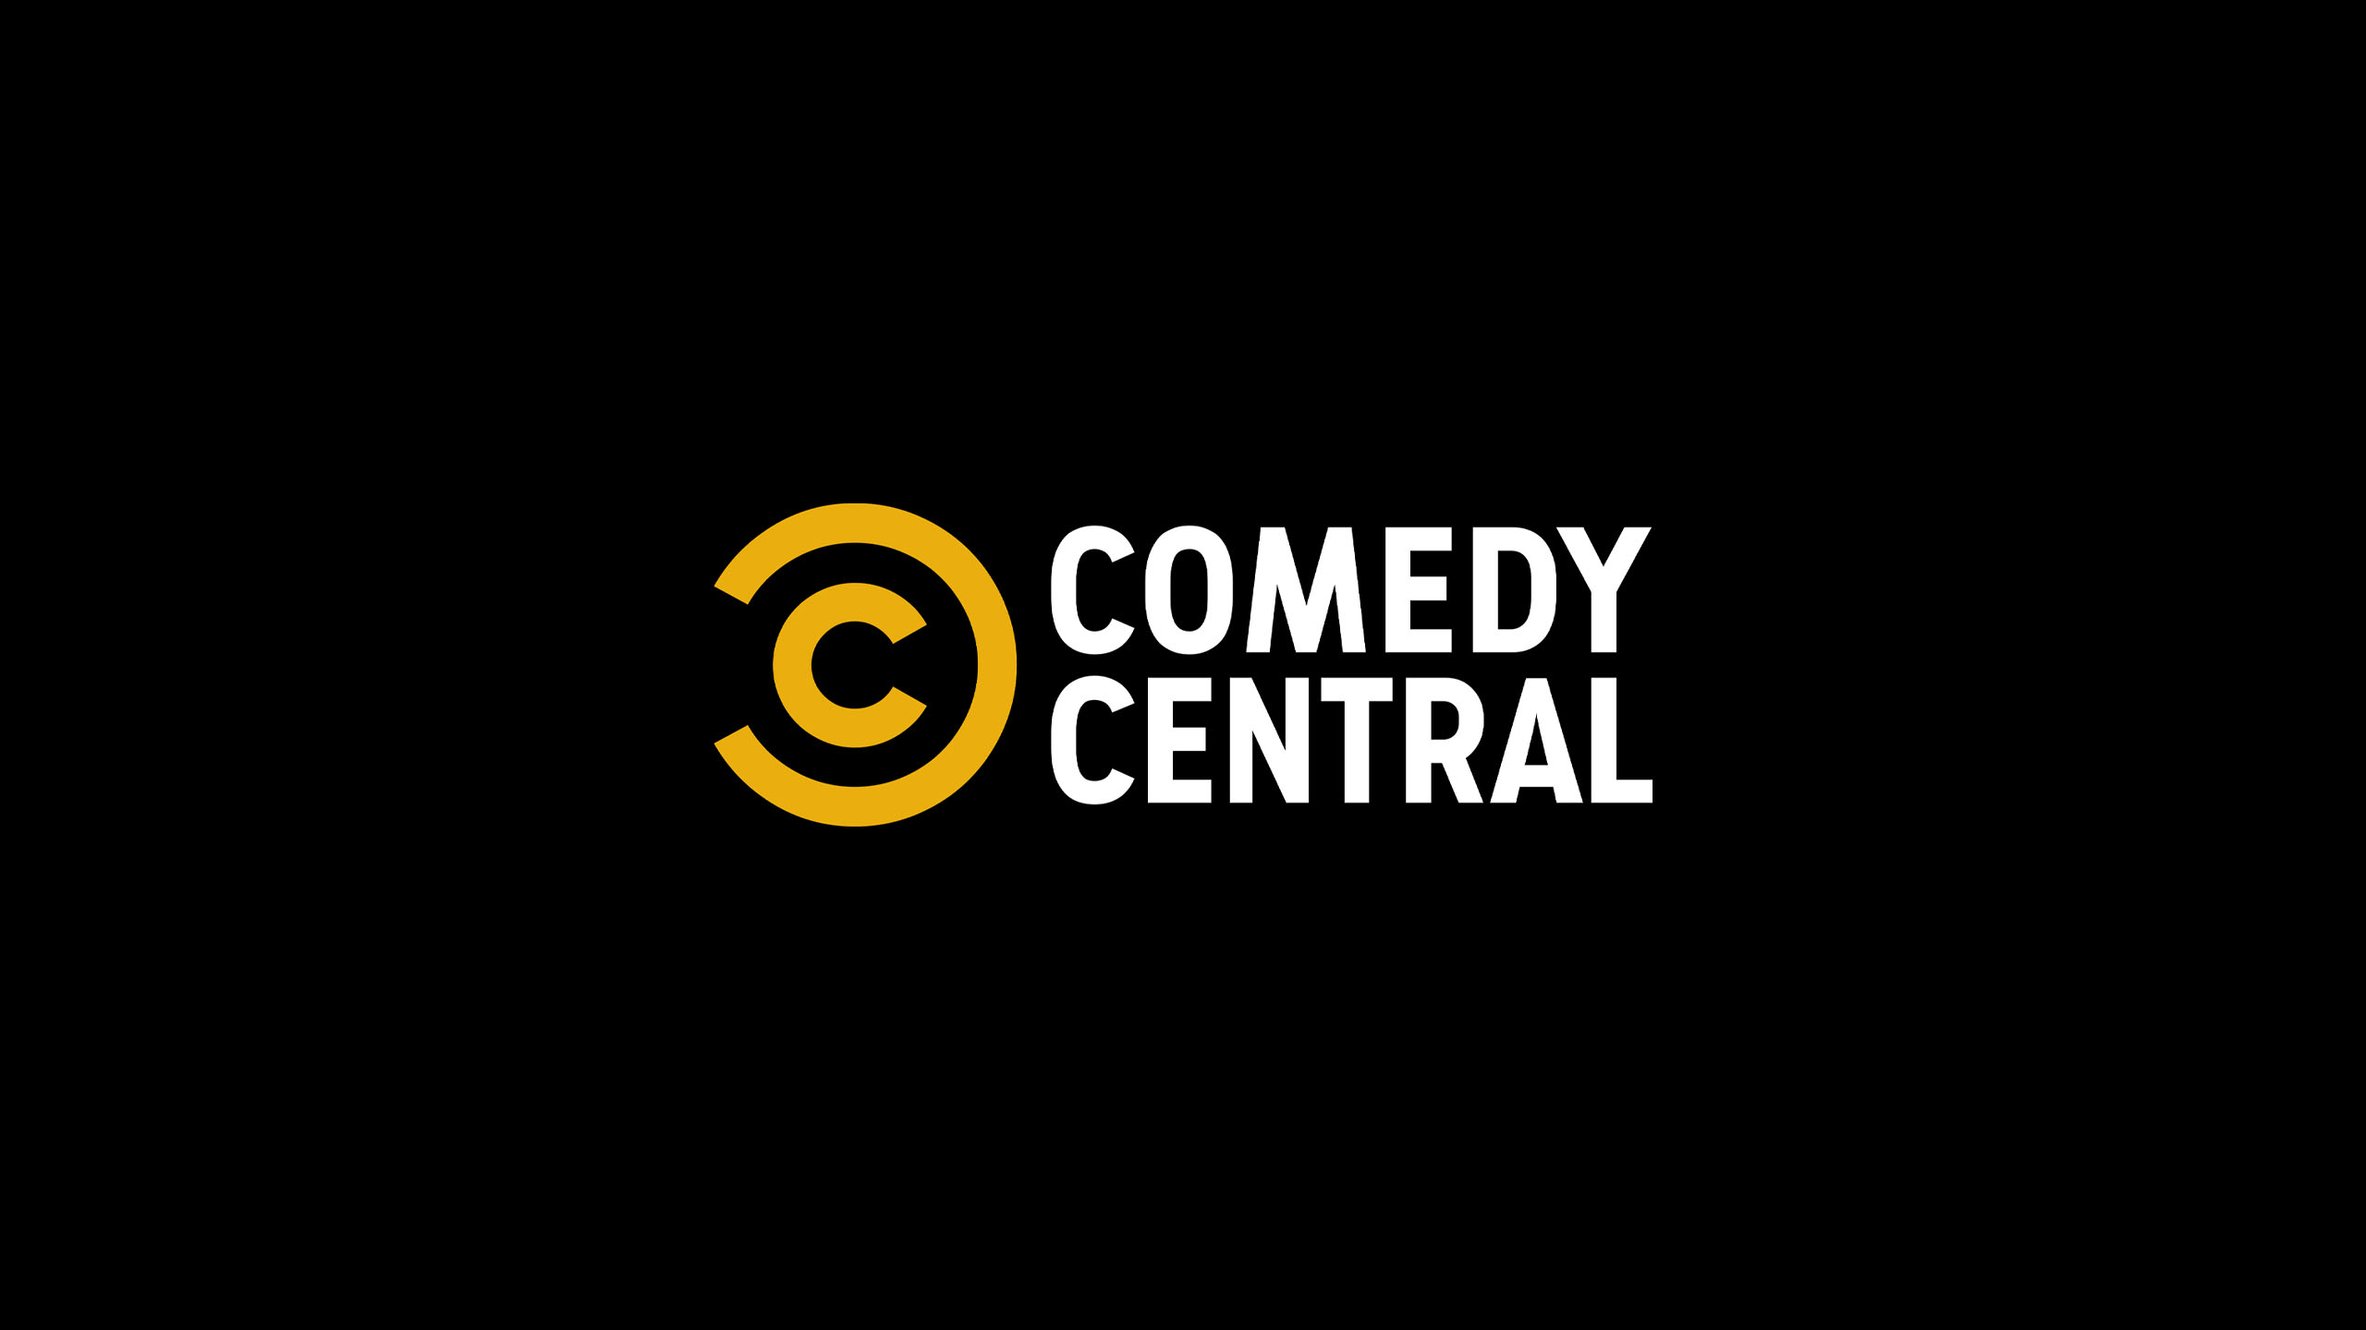 Casting Comedy Central Digital Sketch!